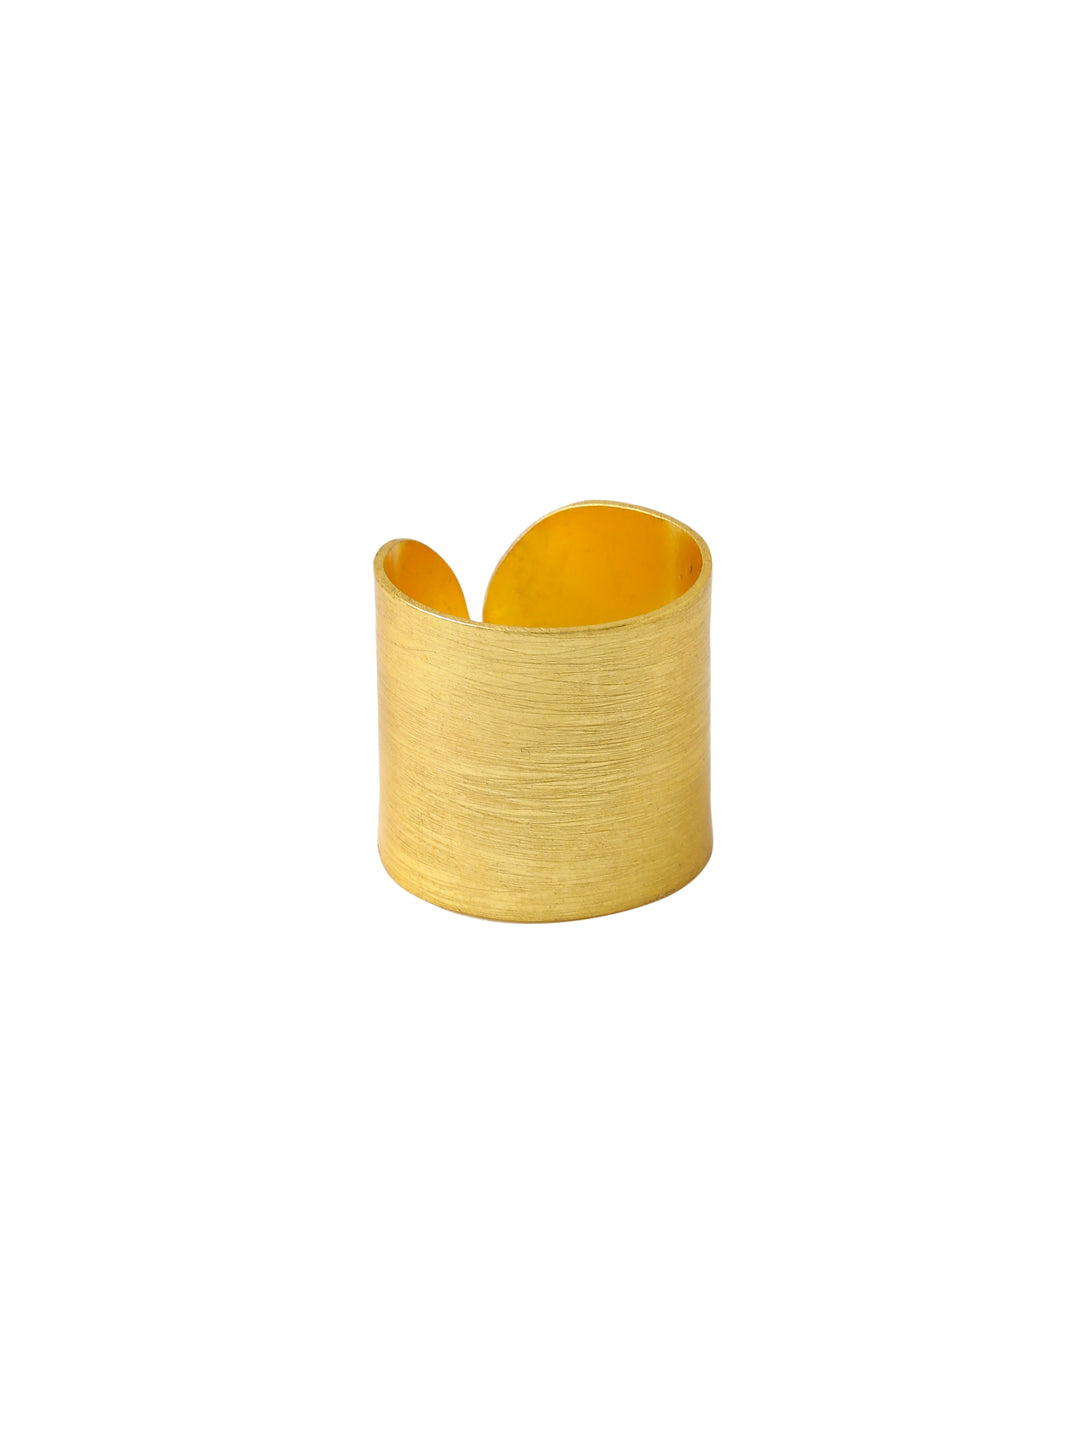 Women's Gold Plated adjustable finger Ring - NVR